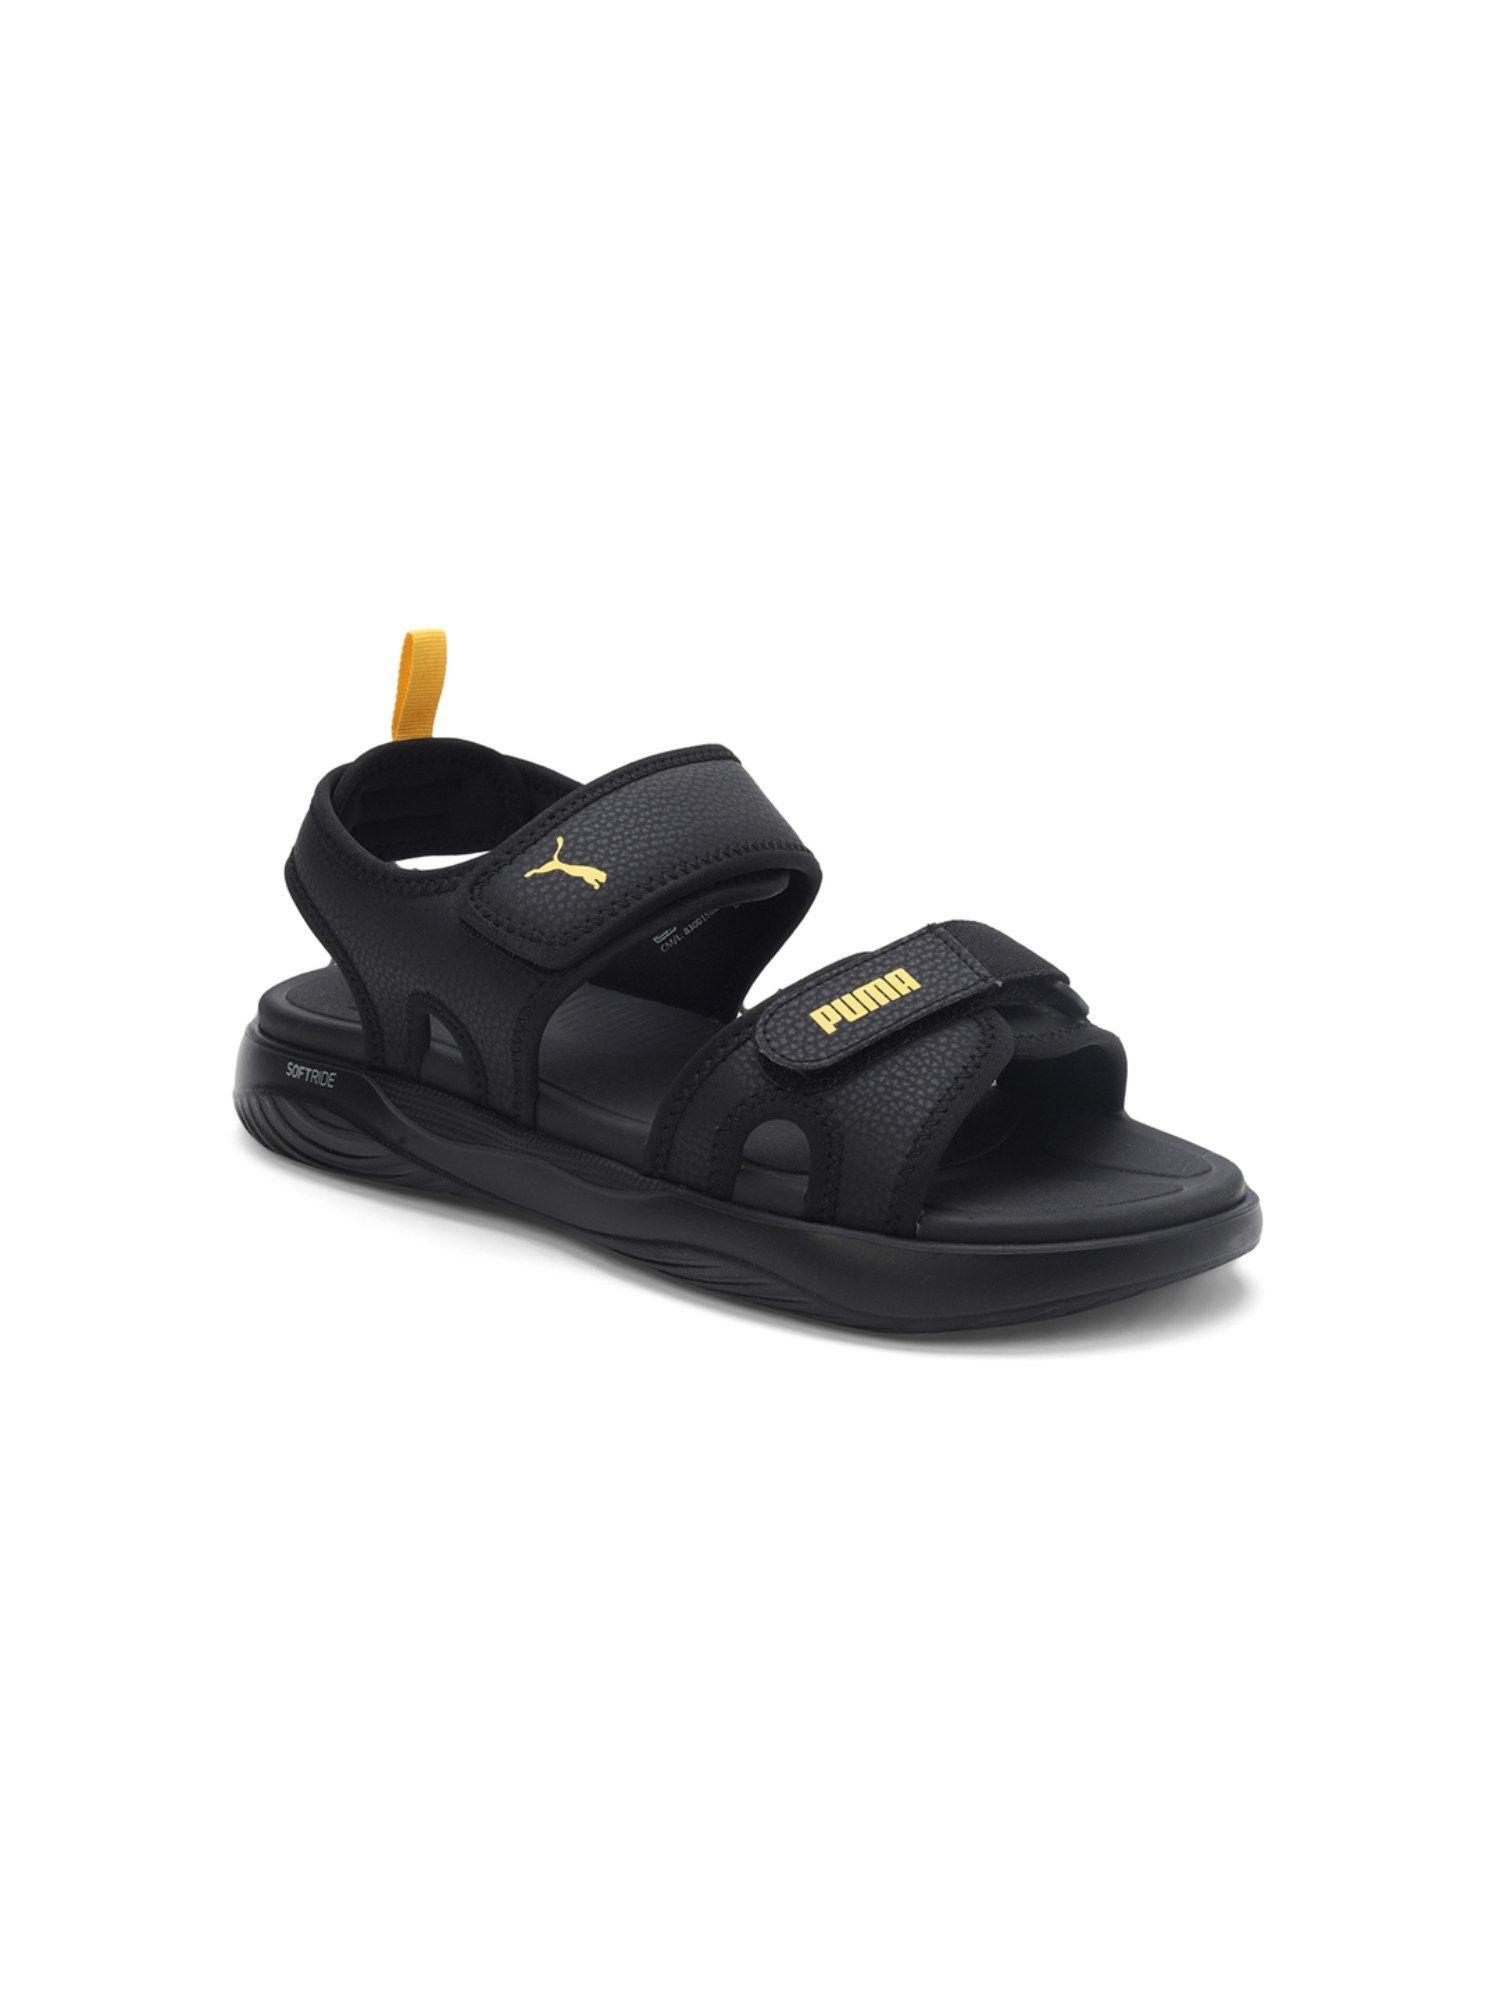 softride-seave-proplex-men-black-sandals